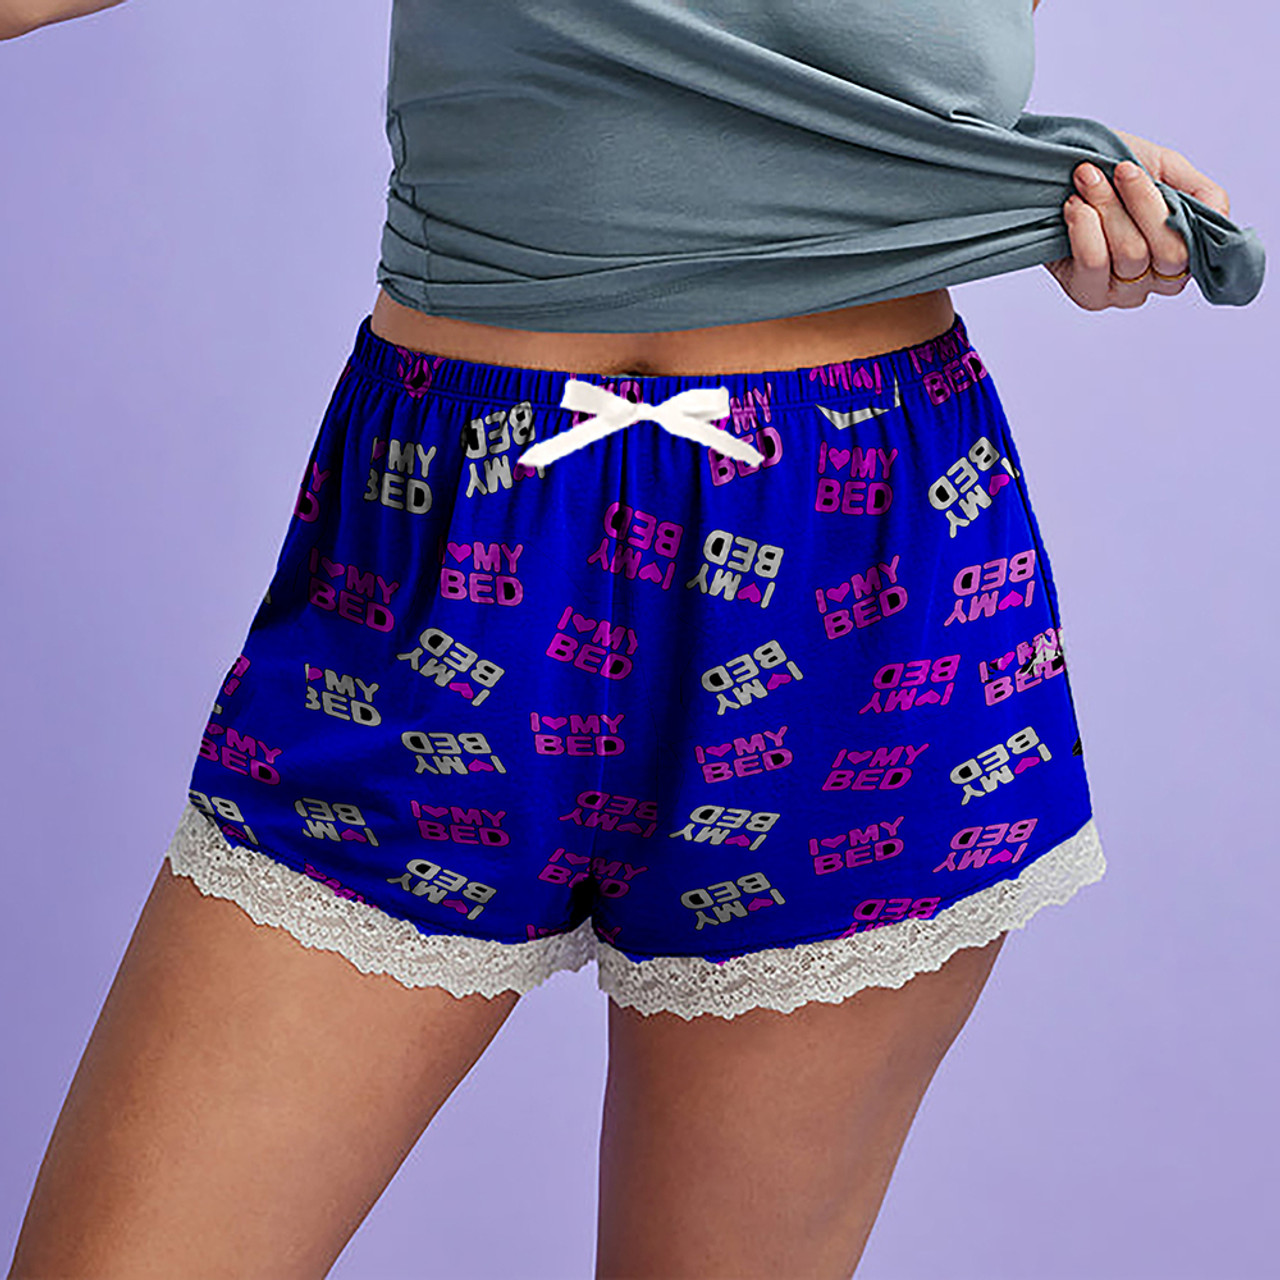 Women's Lace Trim Printed Lounge Pajama Shorts Sleepwear (3-Pack) product image